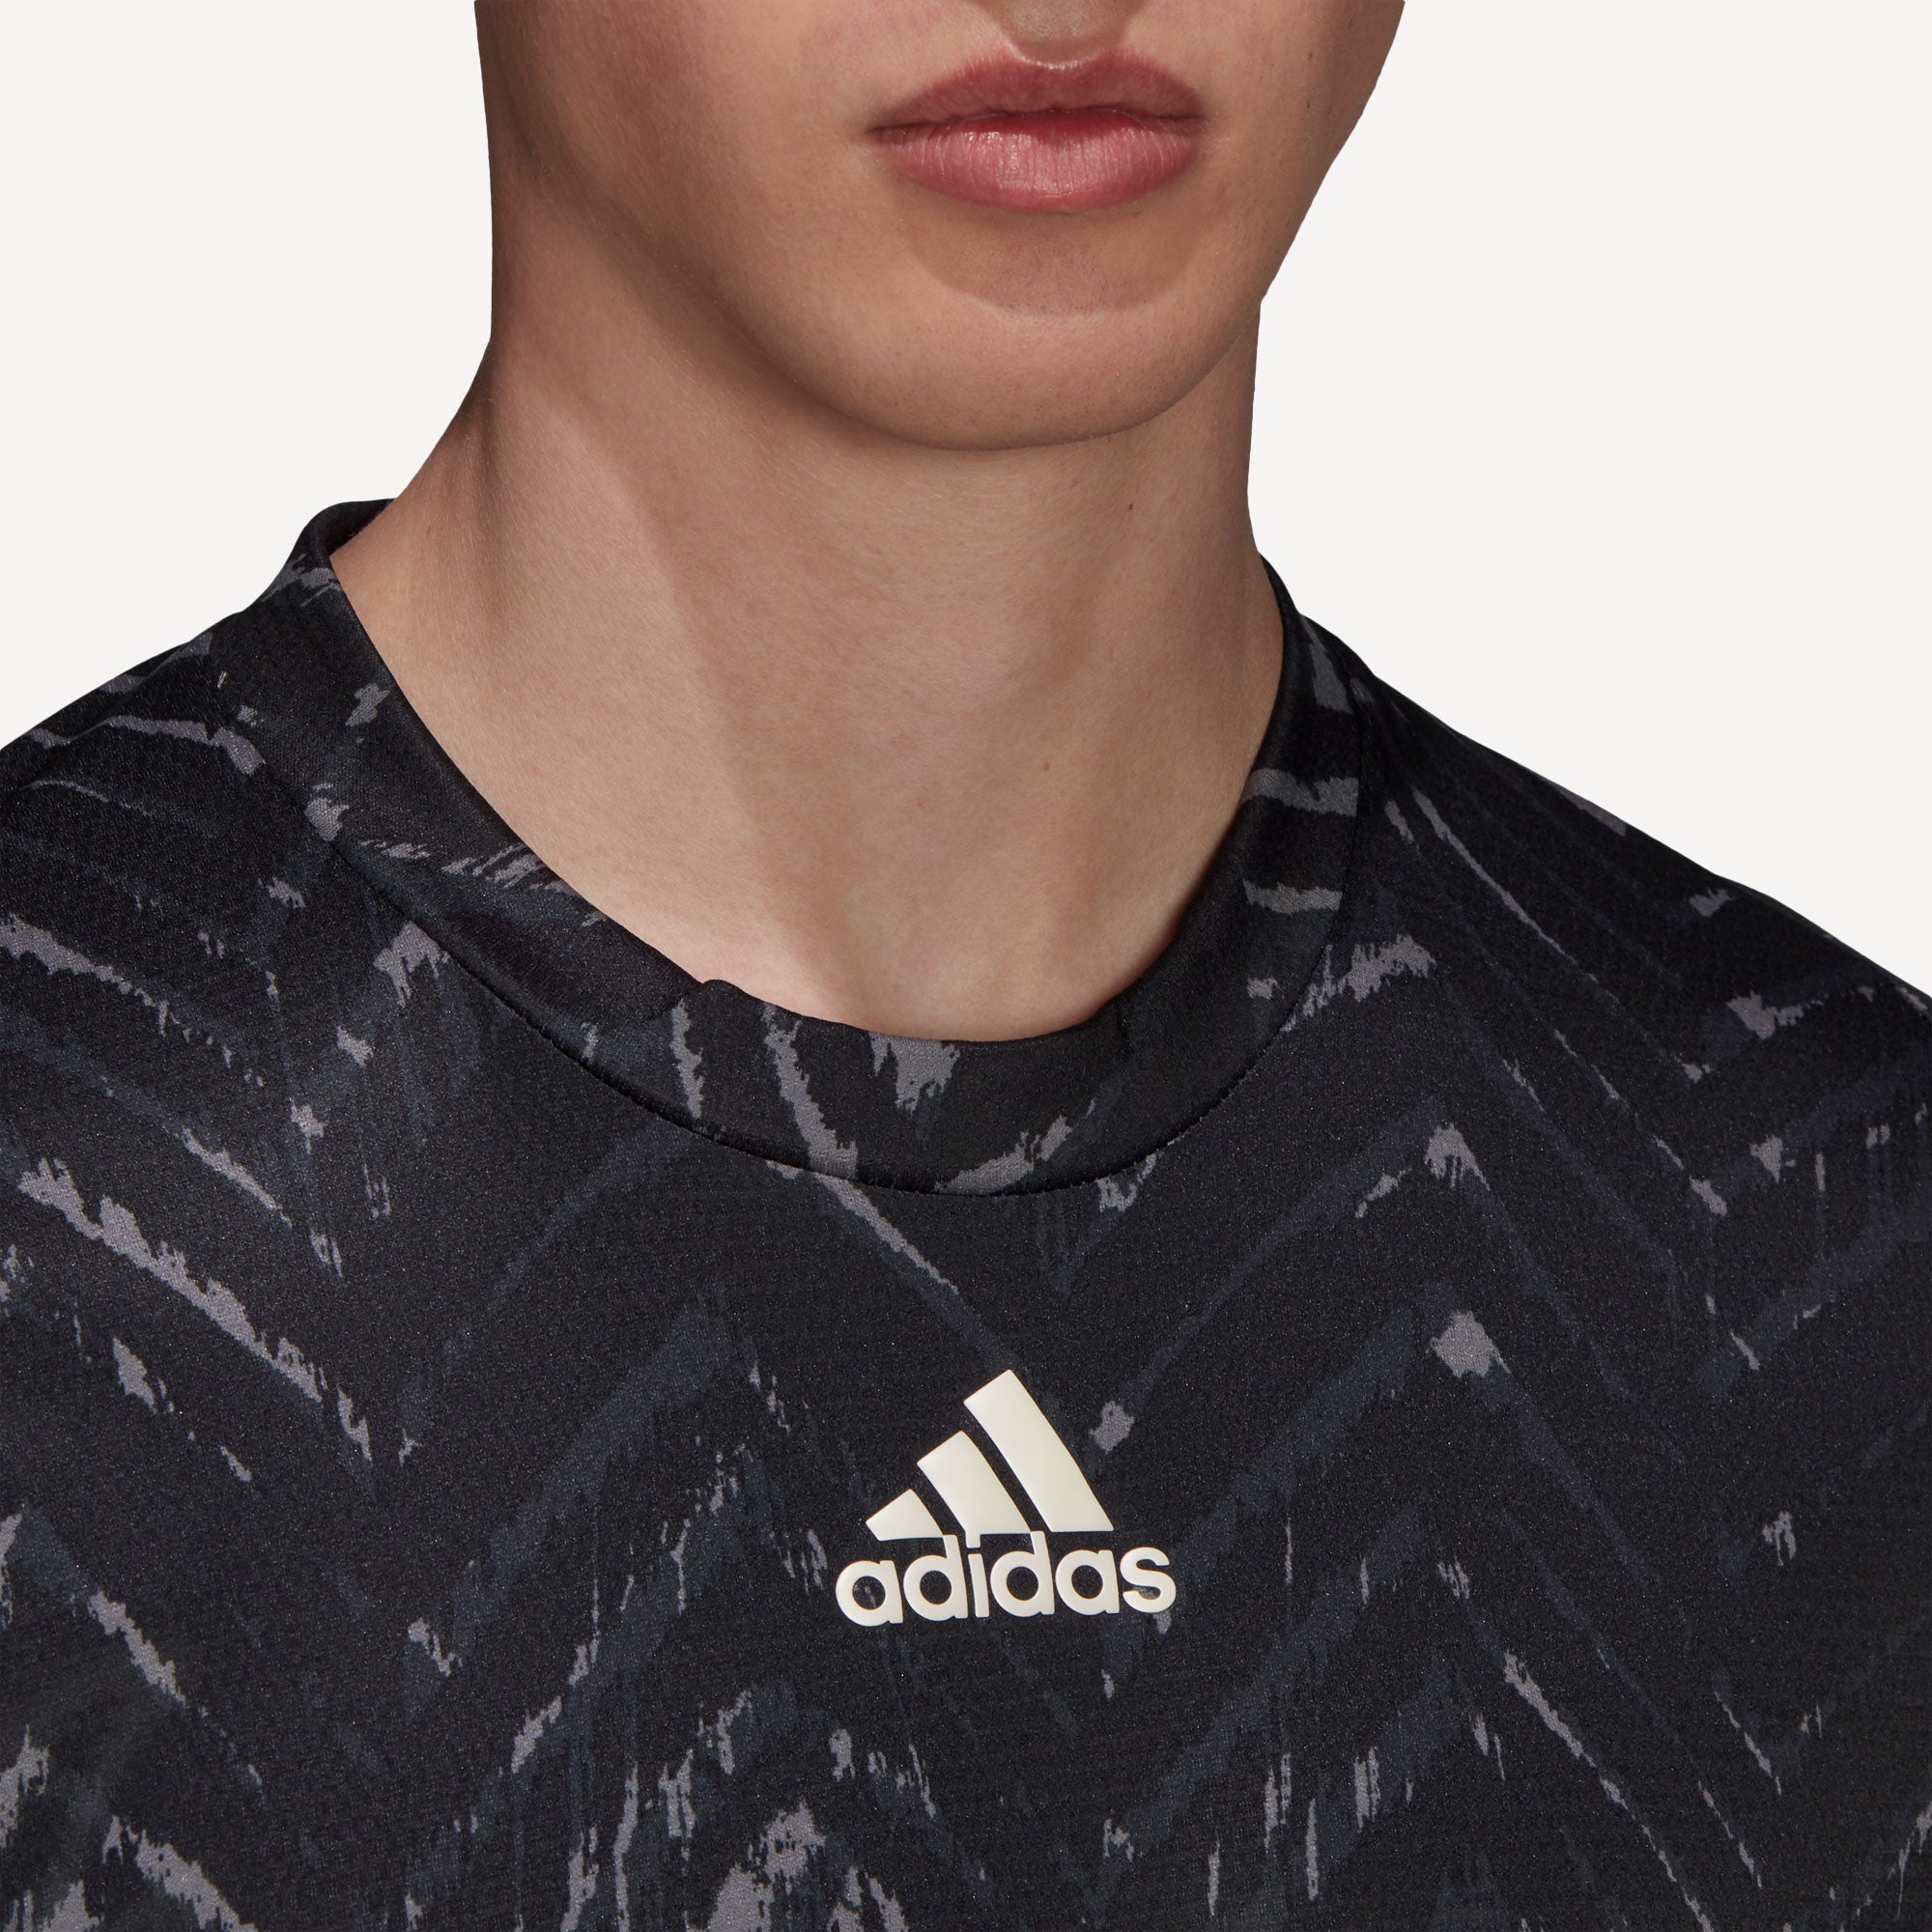 adidas Freelift Primeblue Men's Printed Tennis Shirt Grey (4)